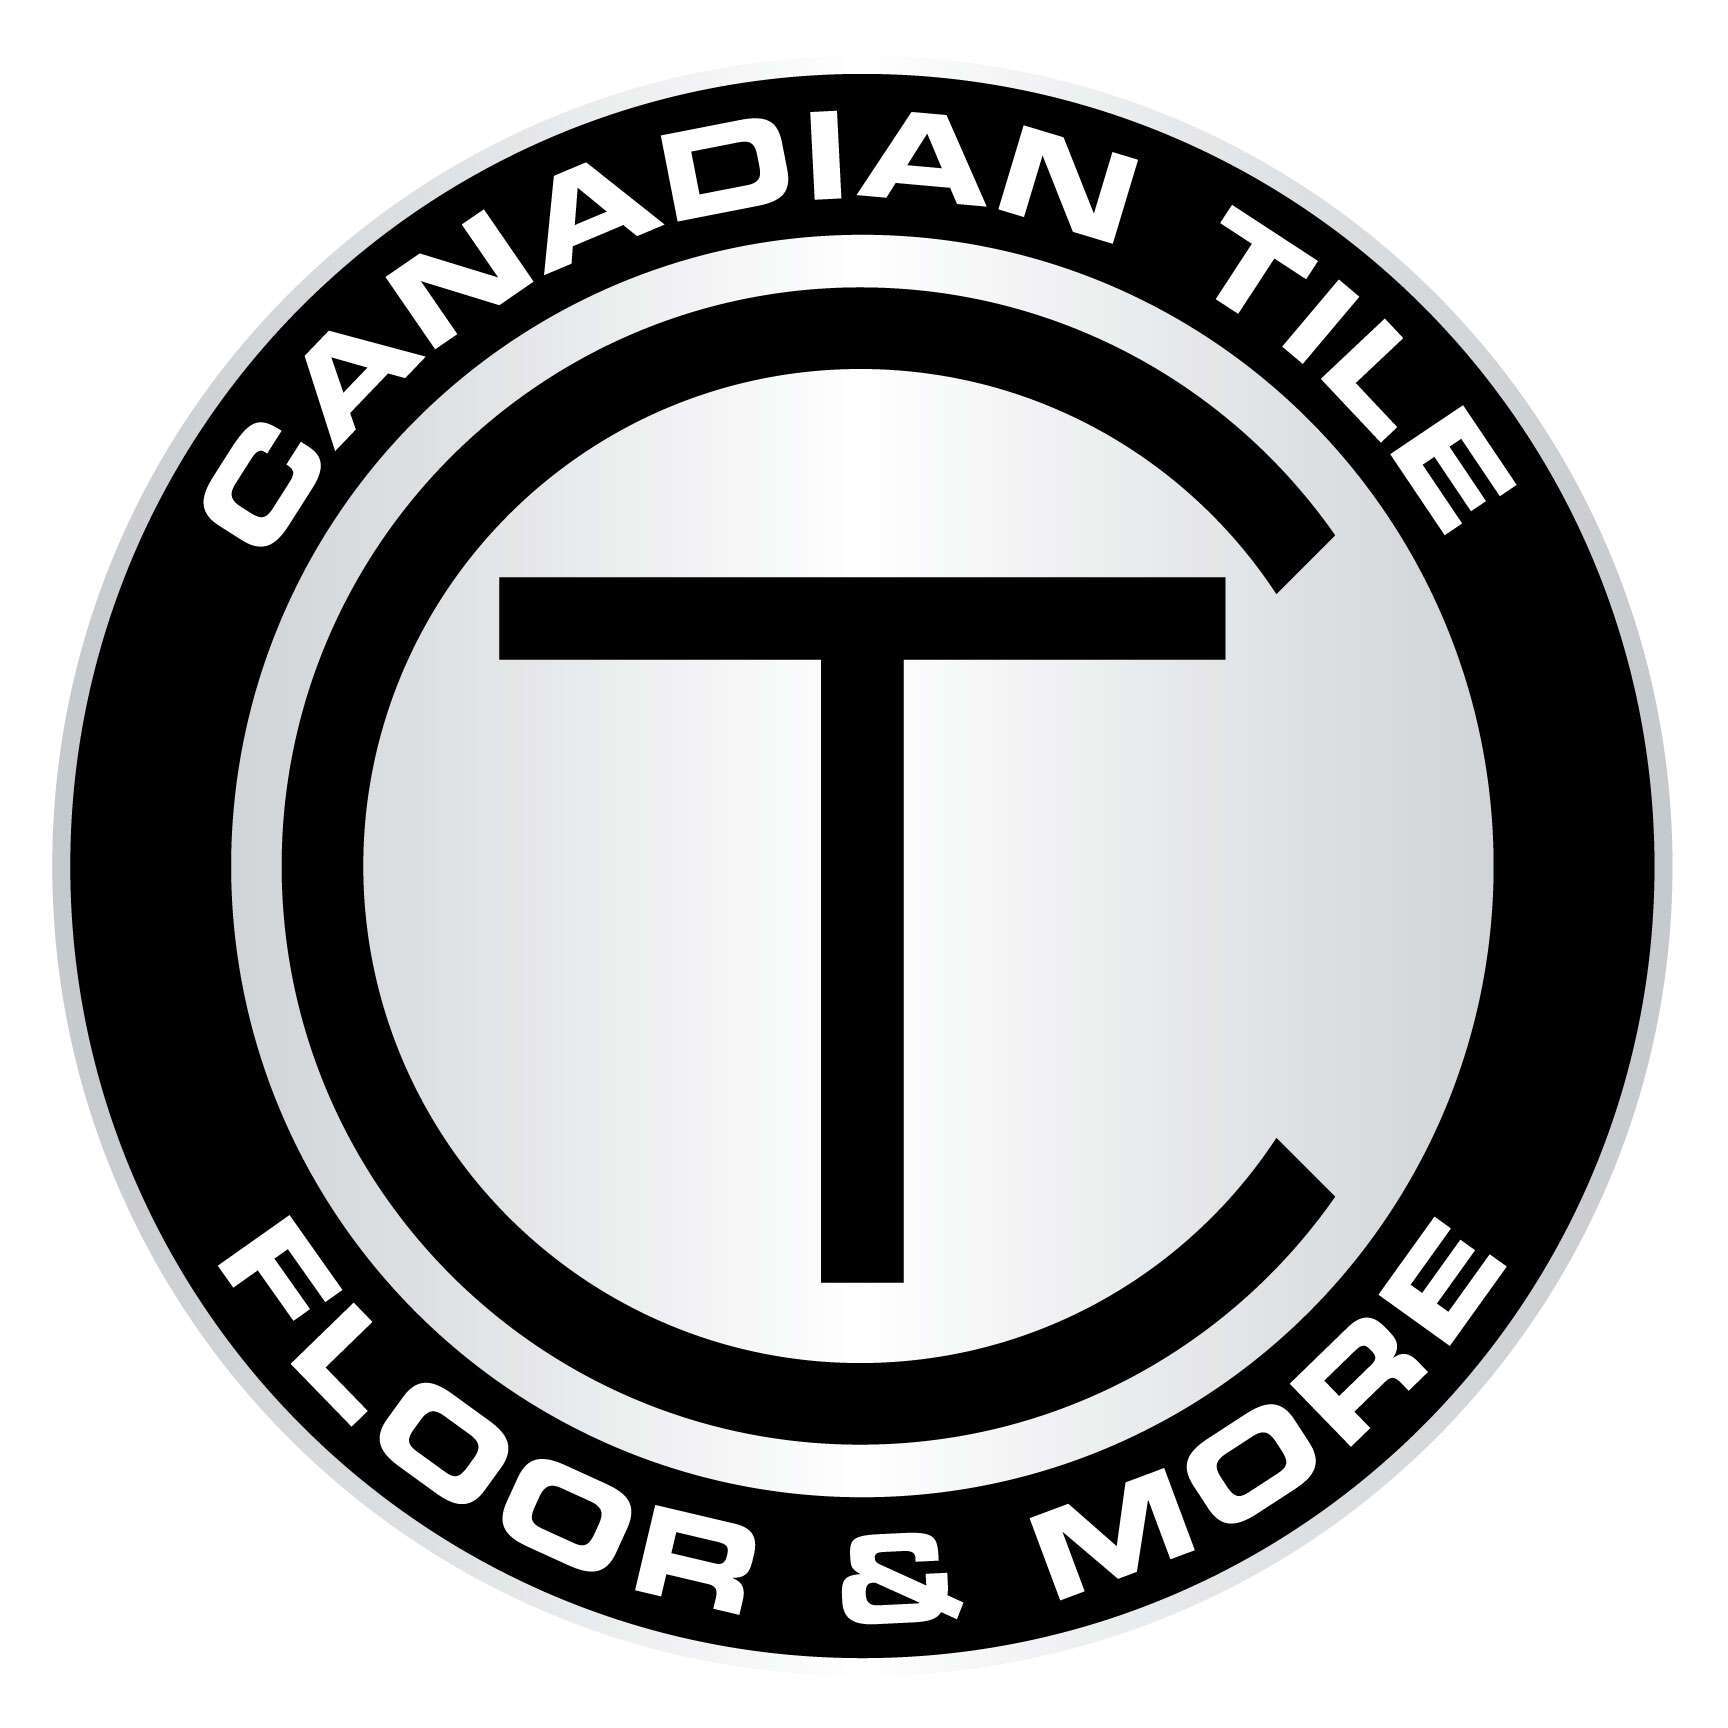 Canadian Tile